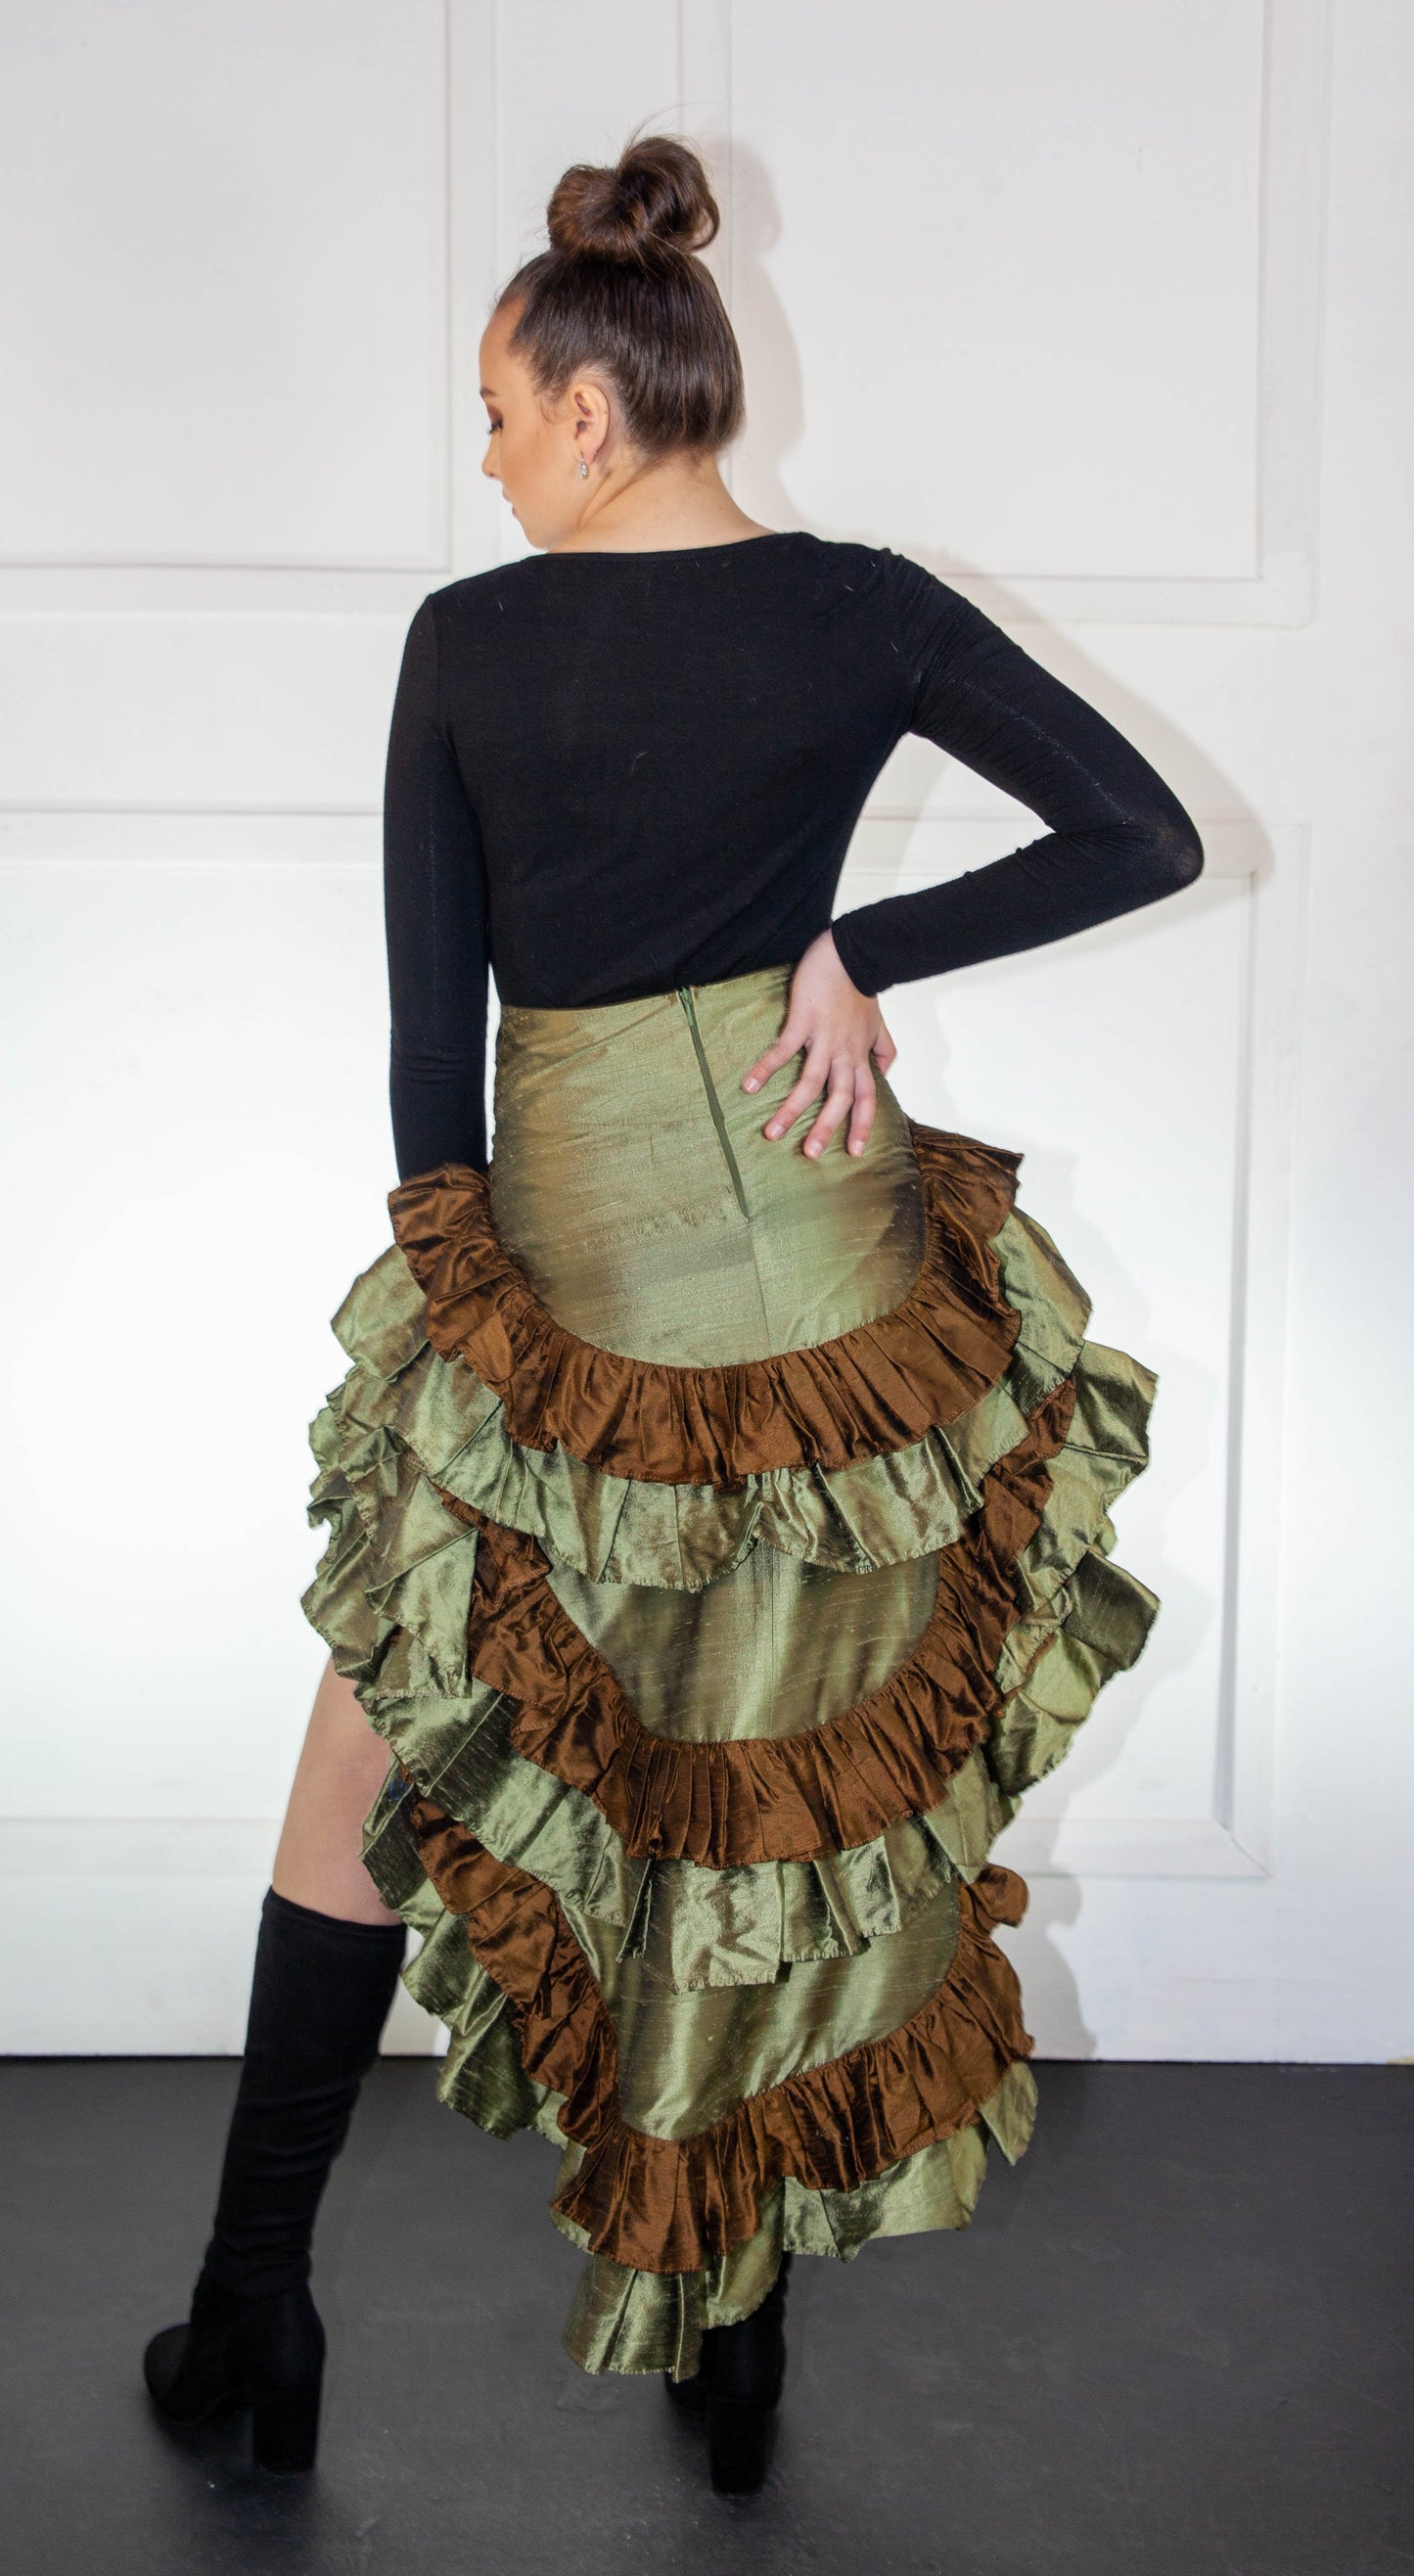 Skirt - Victorian High Low Camo Green & Brown